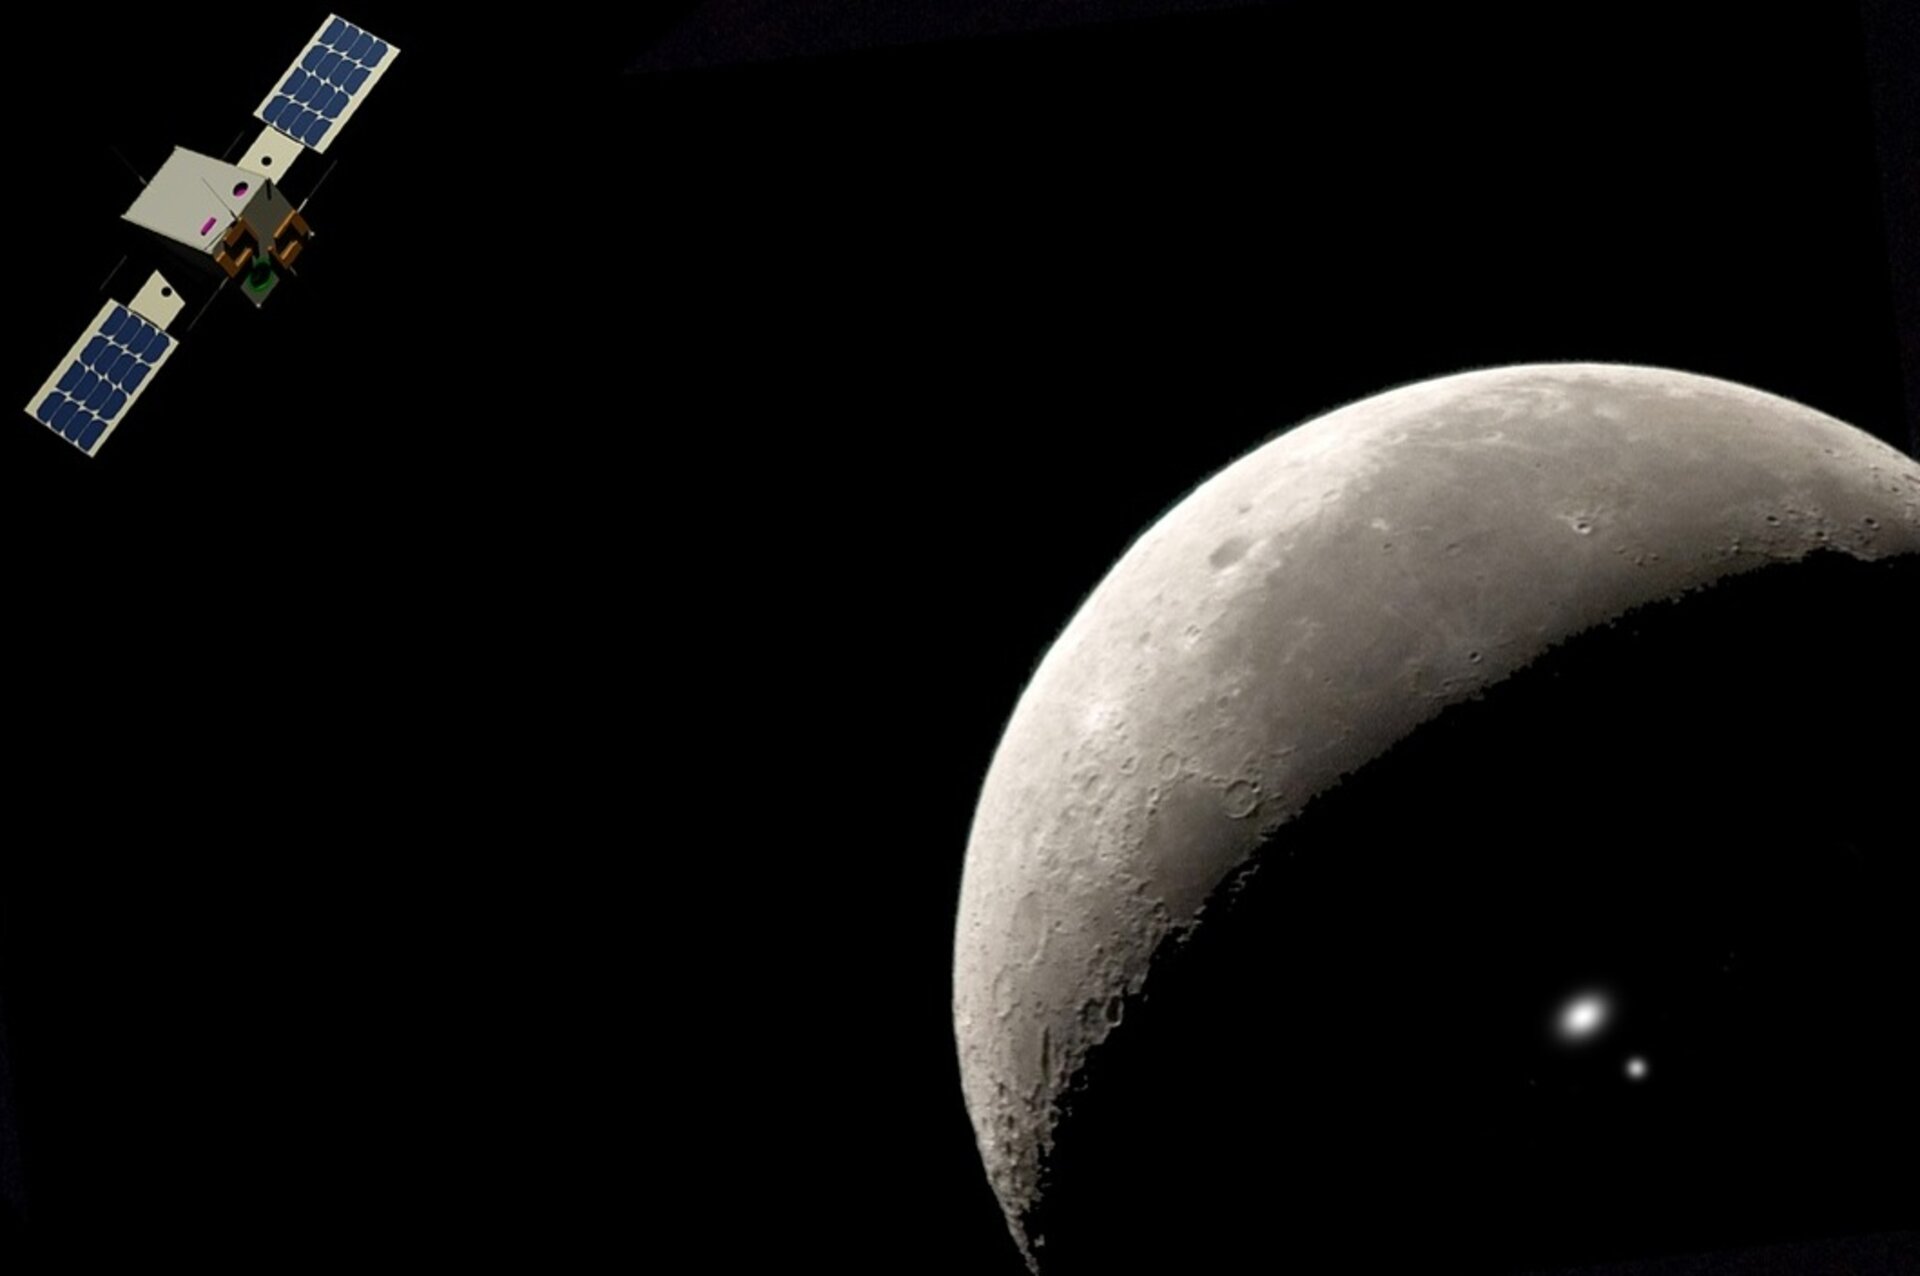 Detecting lunar impacts